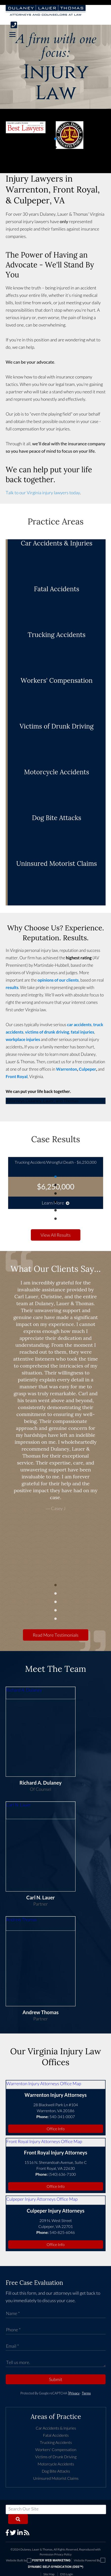 Dulaney Lauer & Thomas LLP - Warrenton VA Lawyers